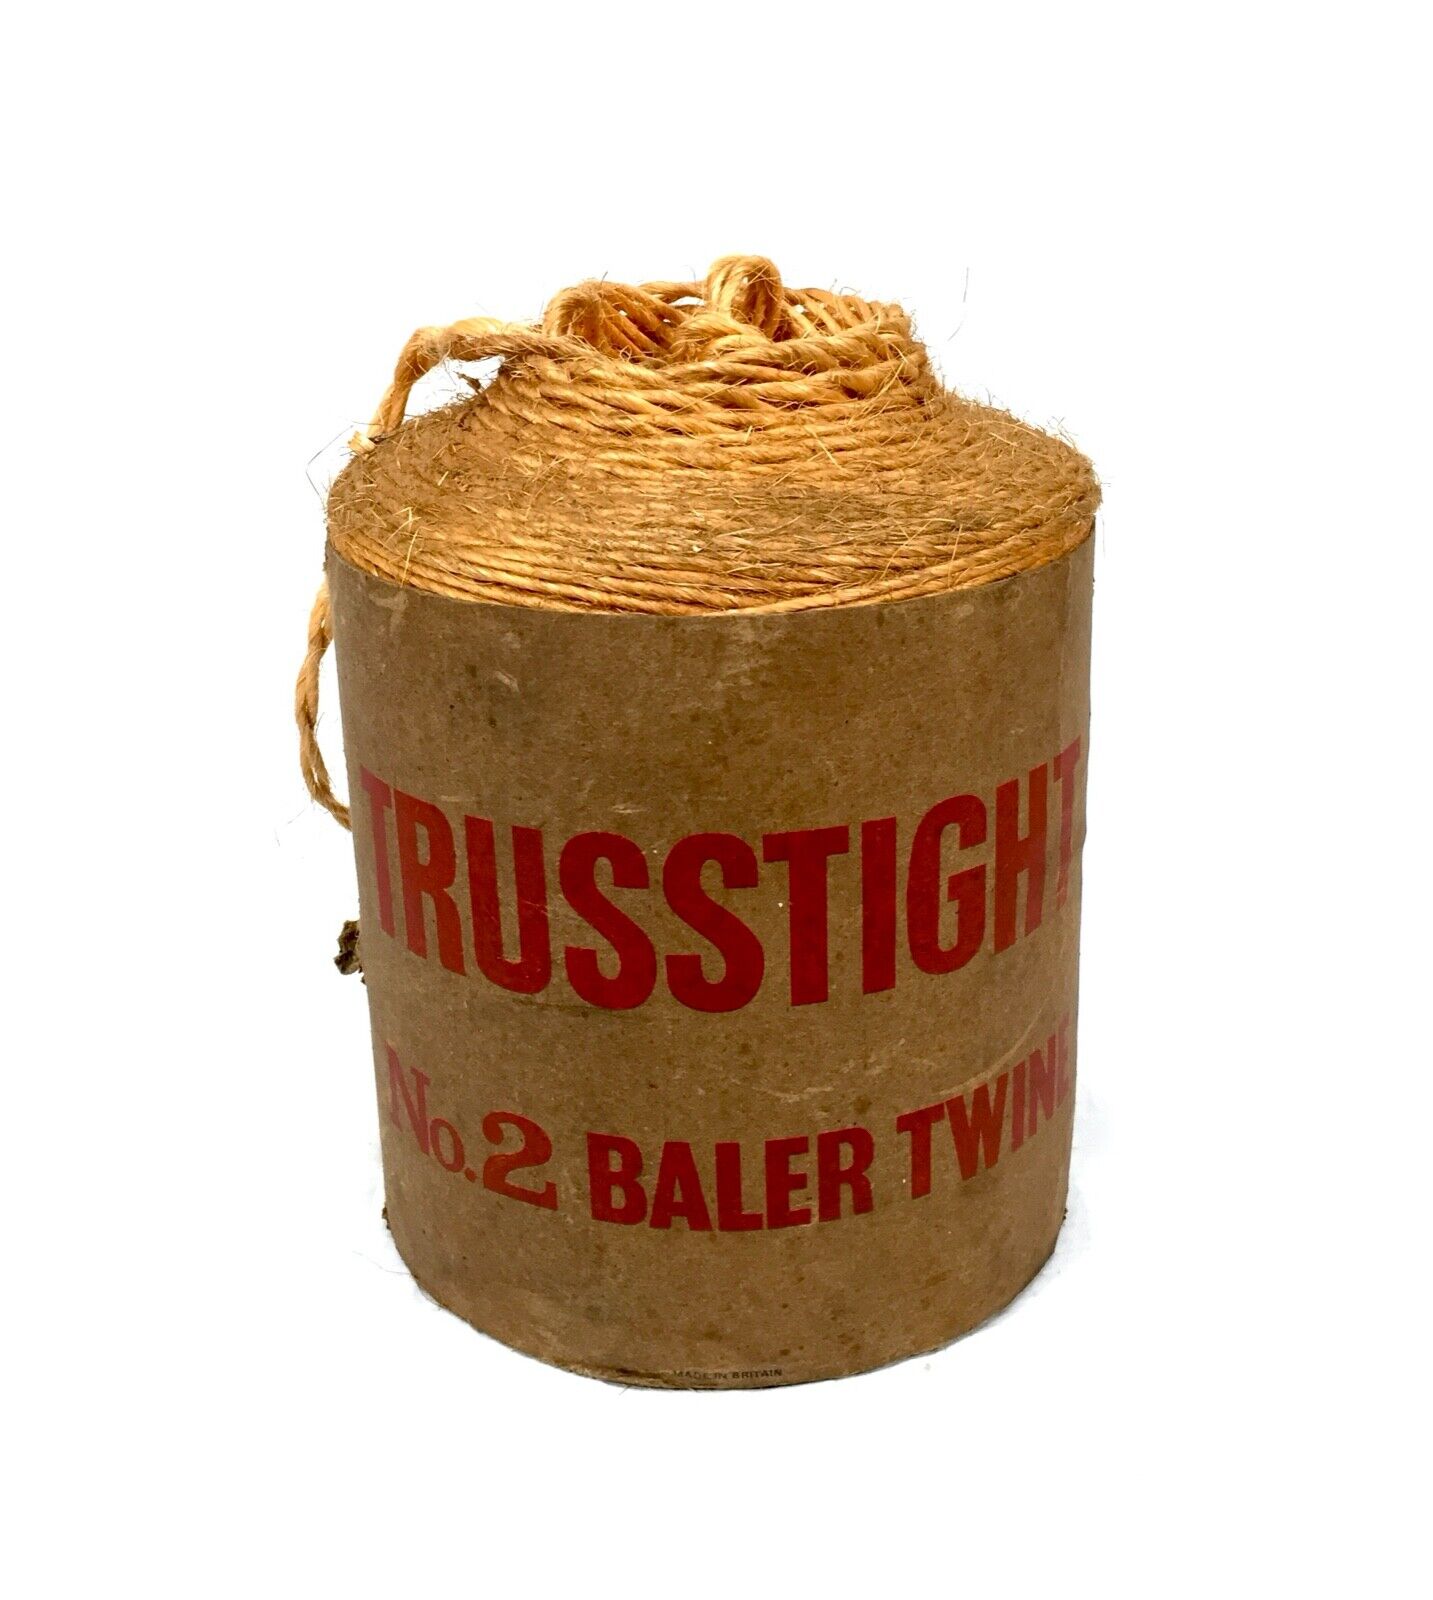 Antique Advertising Interest - Oversized Trusstsight Baler Twine String Farming